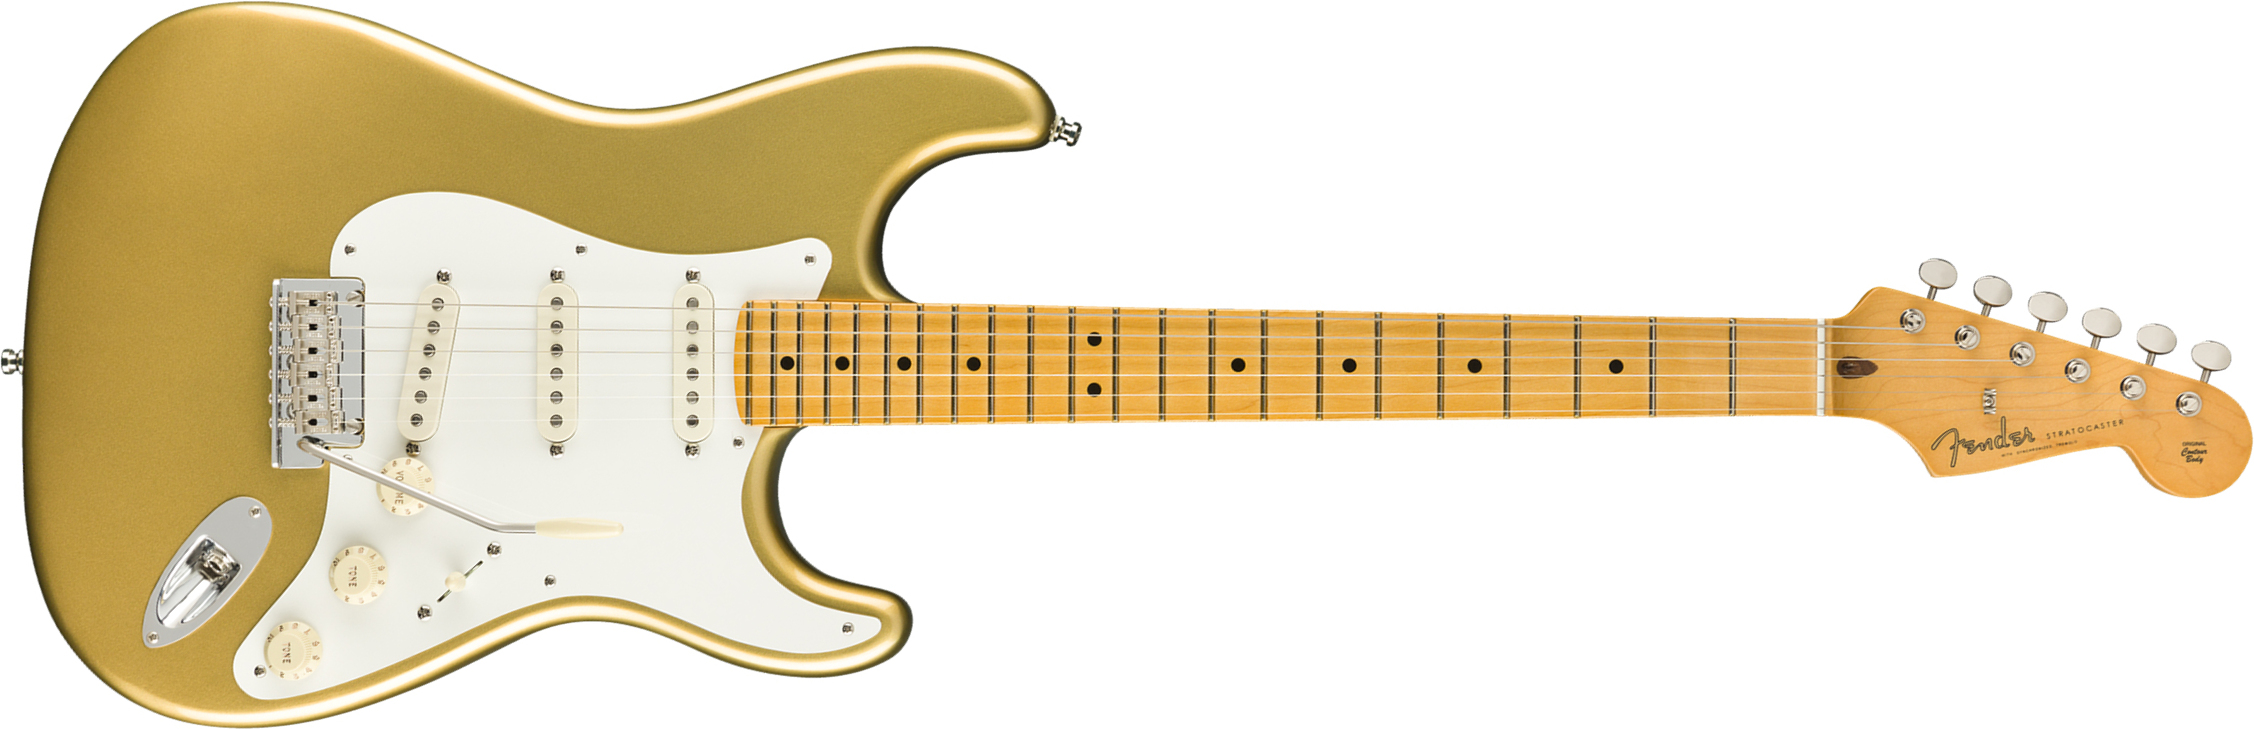 Fender Strat Lincoln Brewster Usa Signature Mn - Aztec Gold - Guitare Électrique Forme Str - Main picture